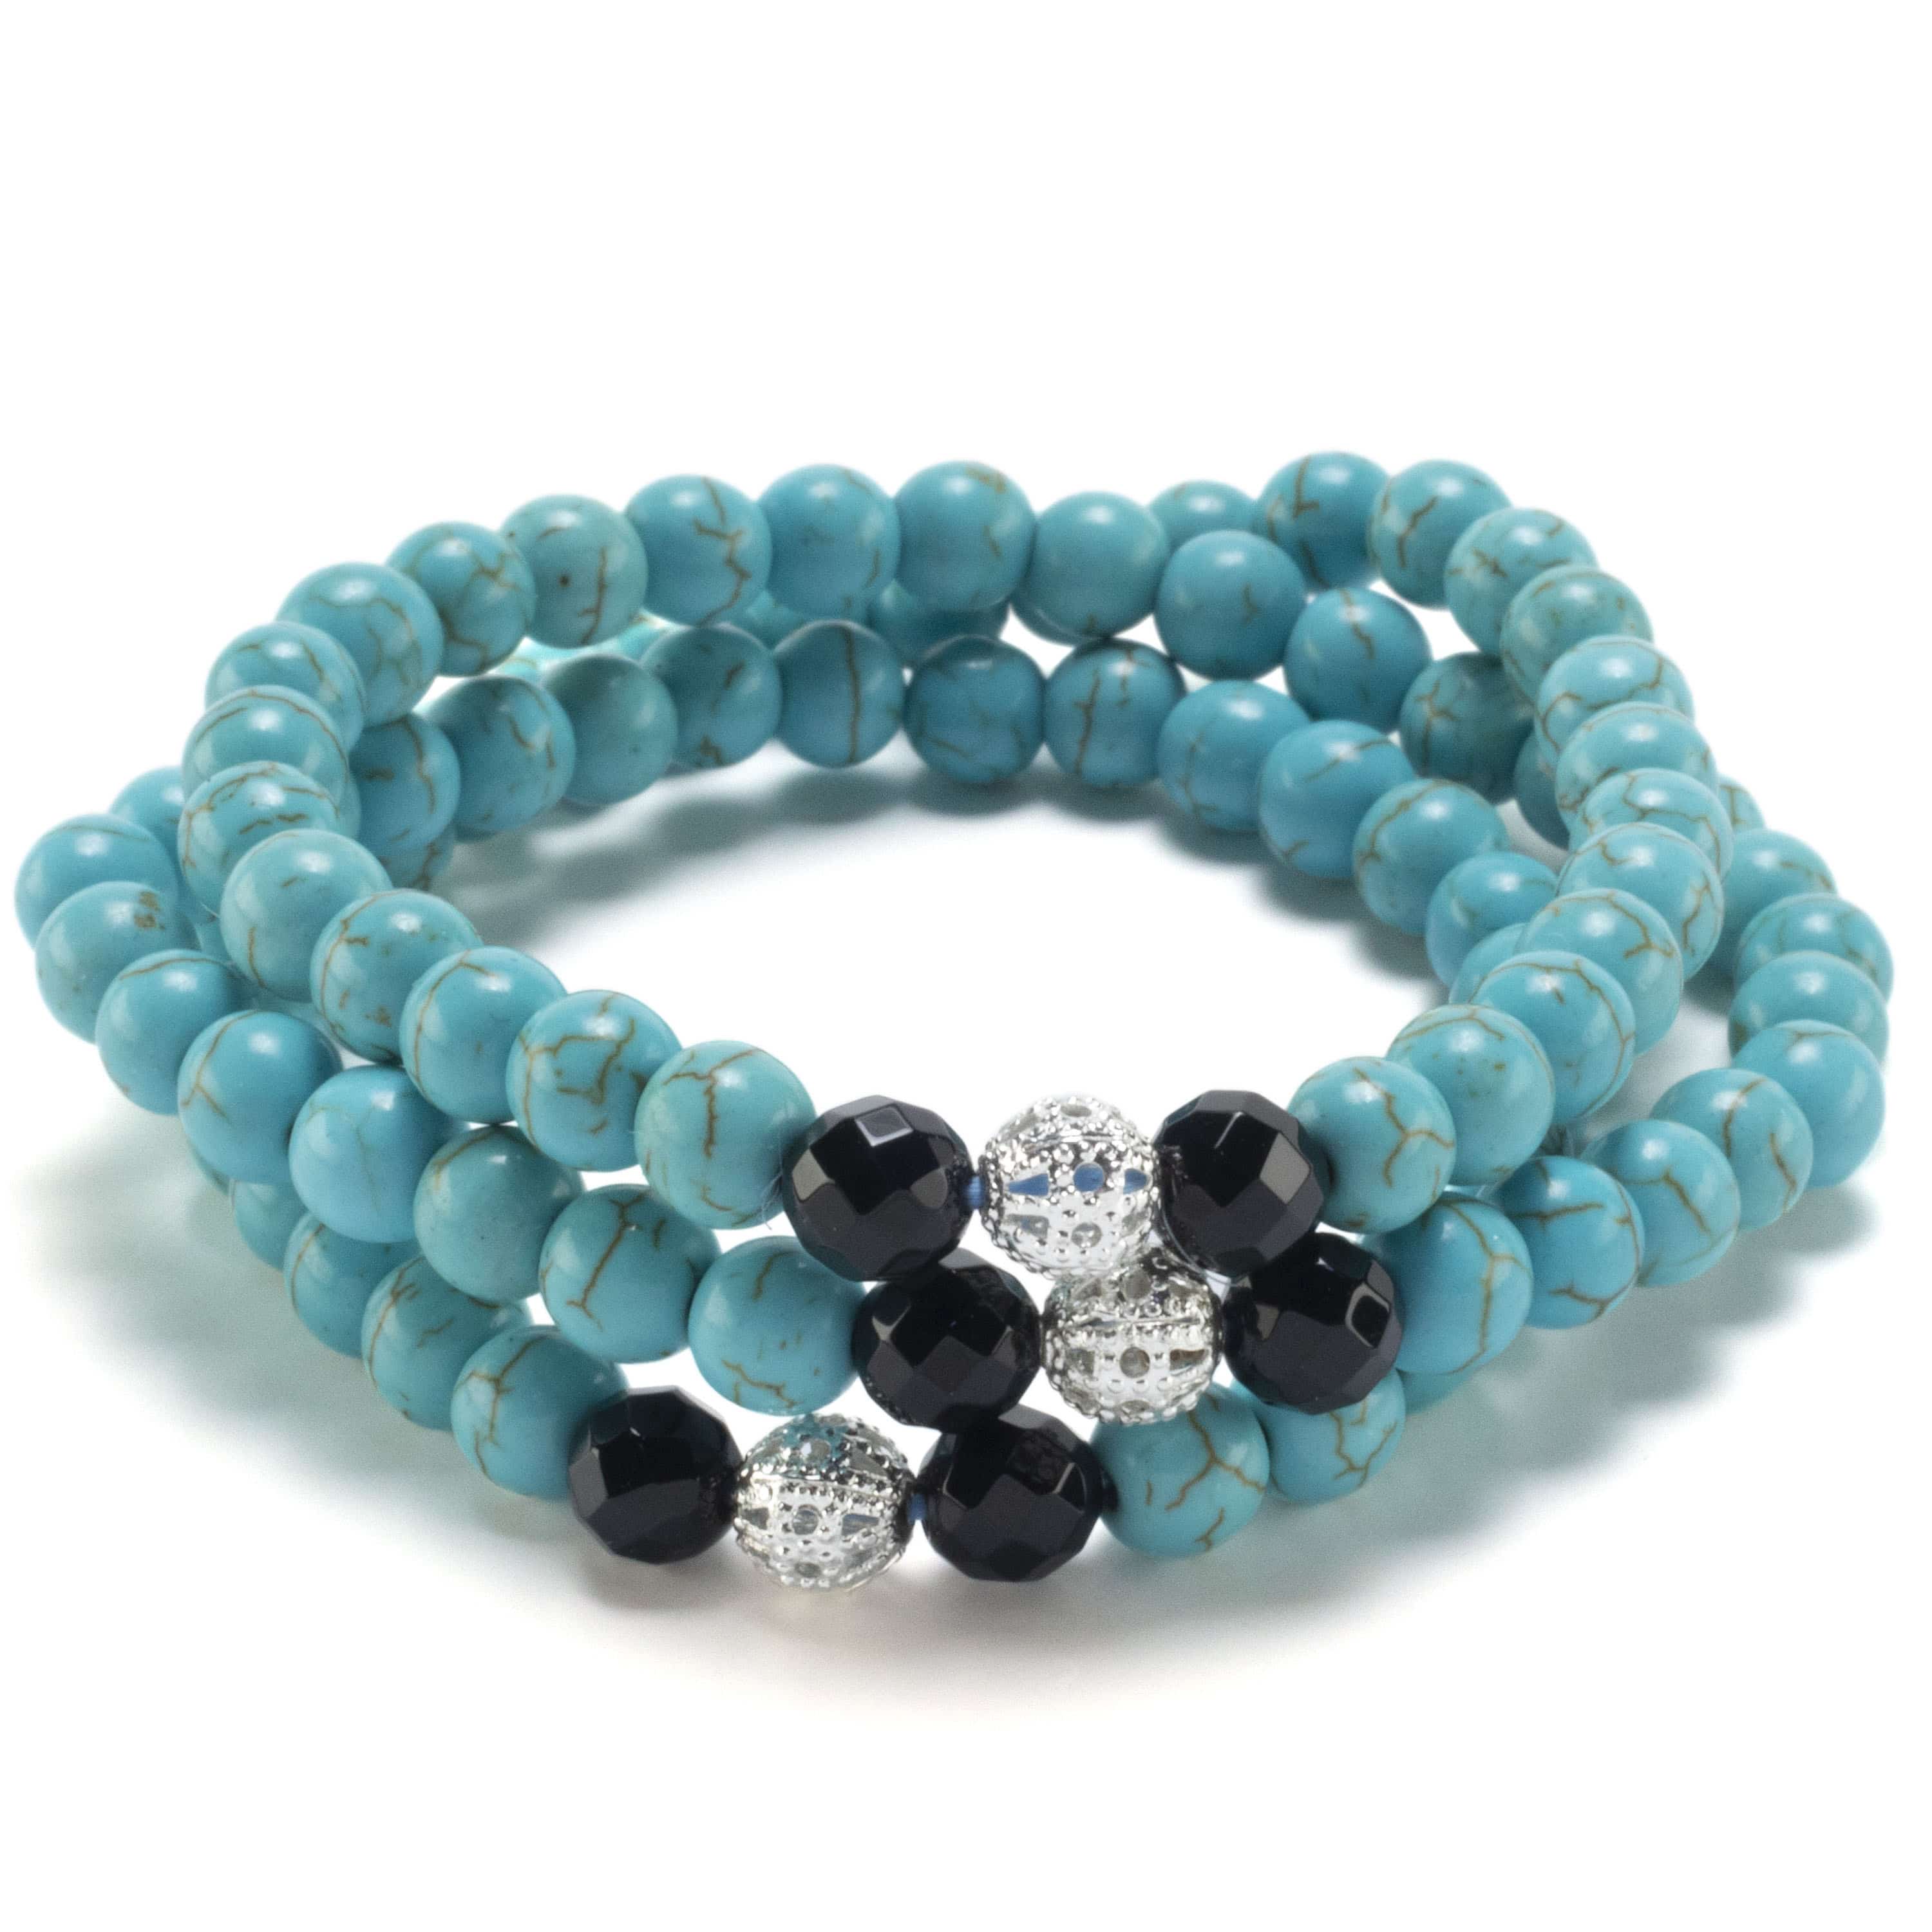 Kalifano Gemstone Bracelets Howlite Turquoise 6mm Beads with Black Agate and Silver Accent Beads Triple Wrap Elastic Gemstone Bracelet WHITE-BGI3-067